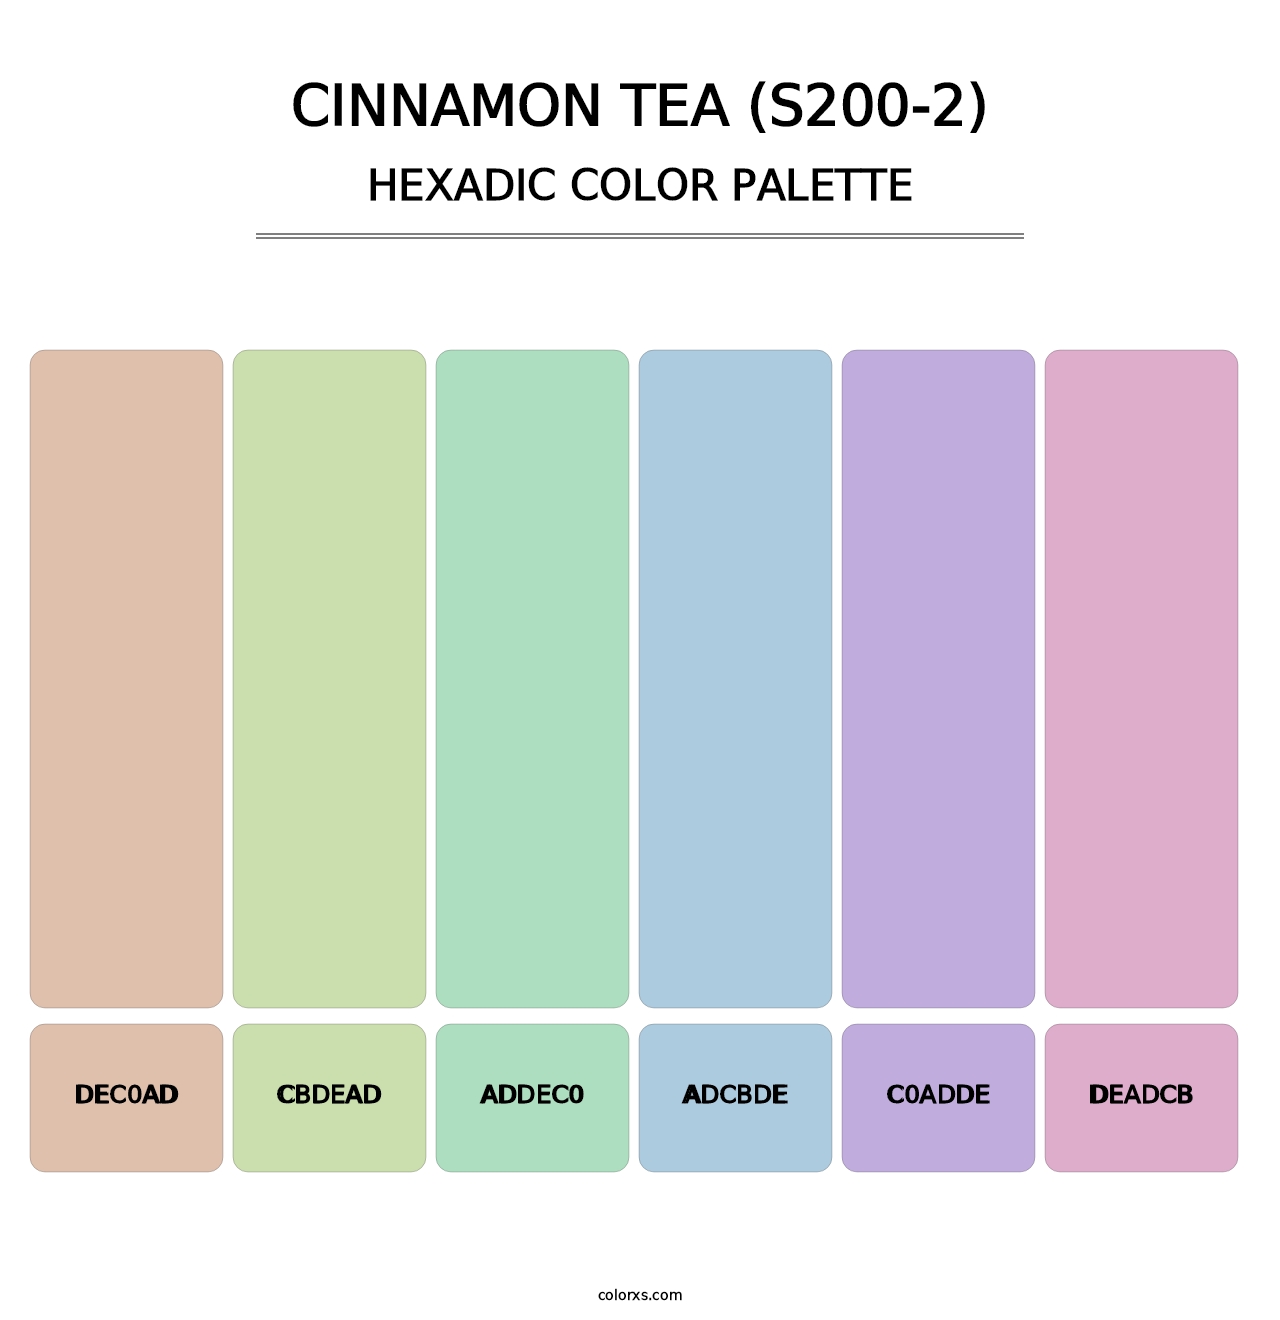 Cinnamon Tea (S200-2) - Hexadic Color Palette